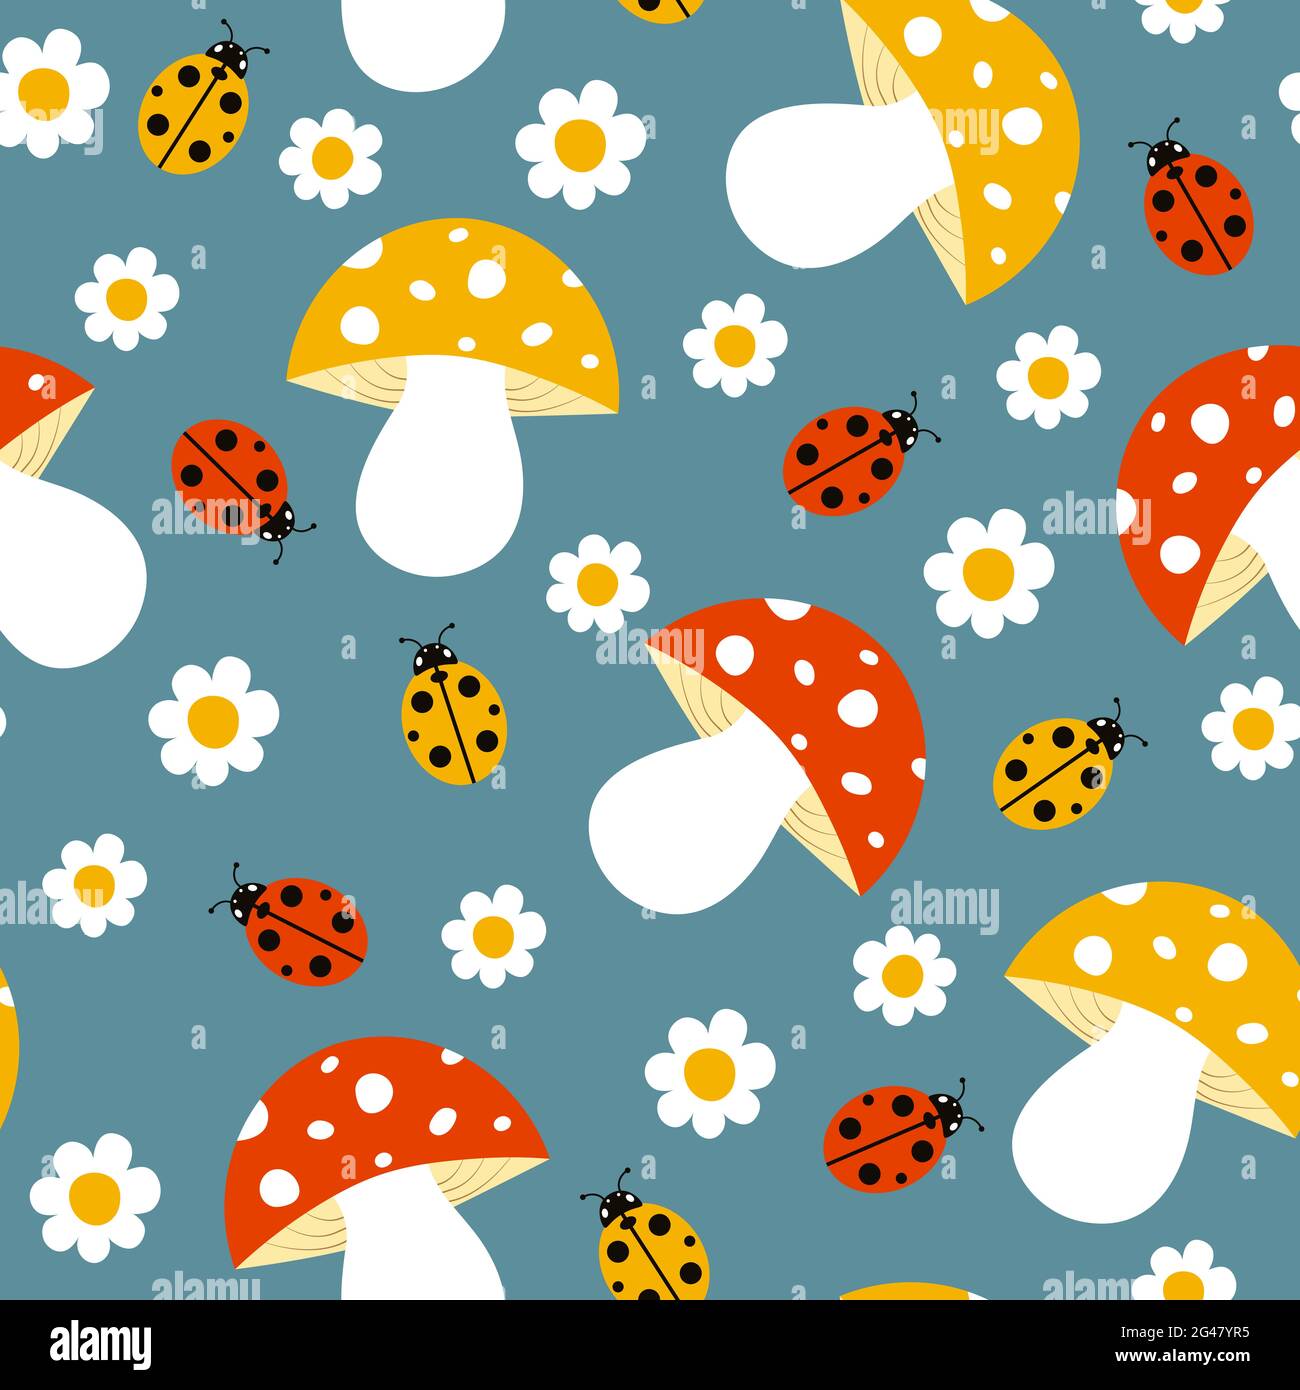 Cute Childish Seamless Pattern With Mushrooms Ladybugs And